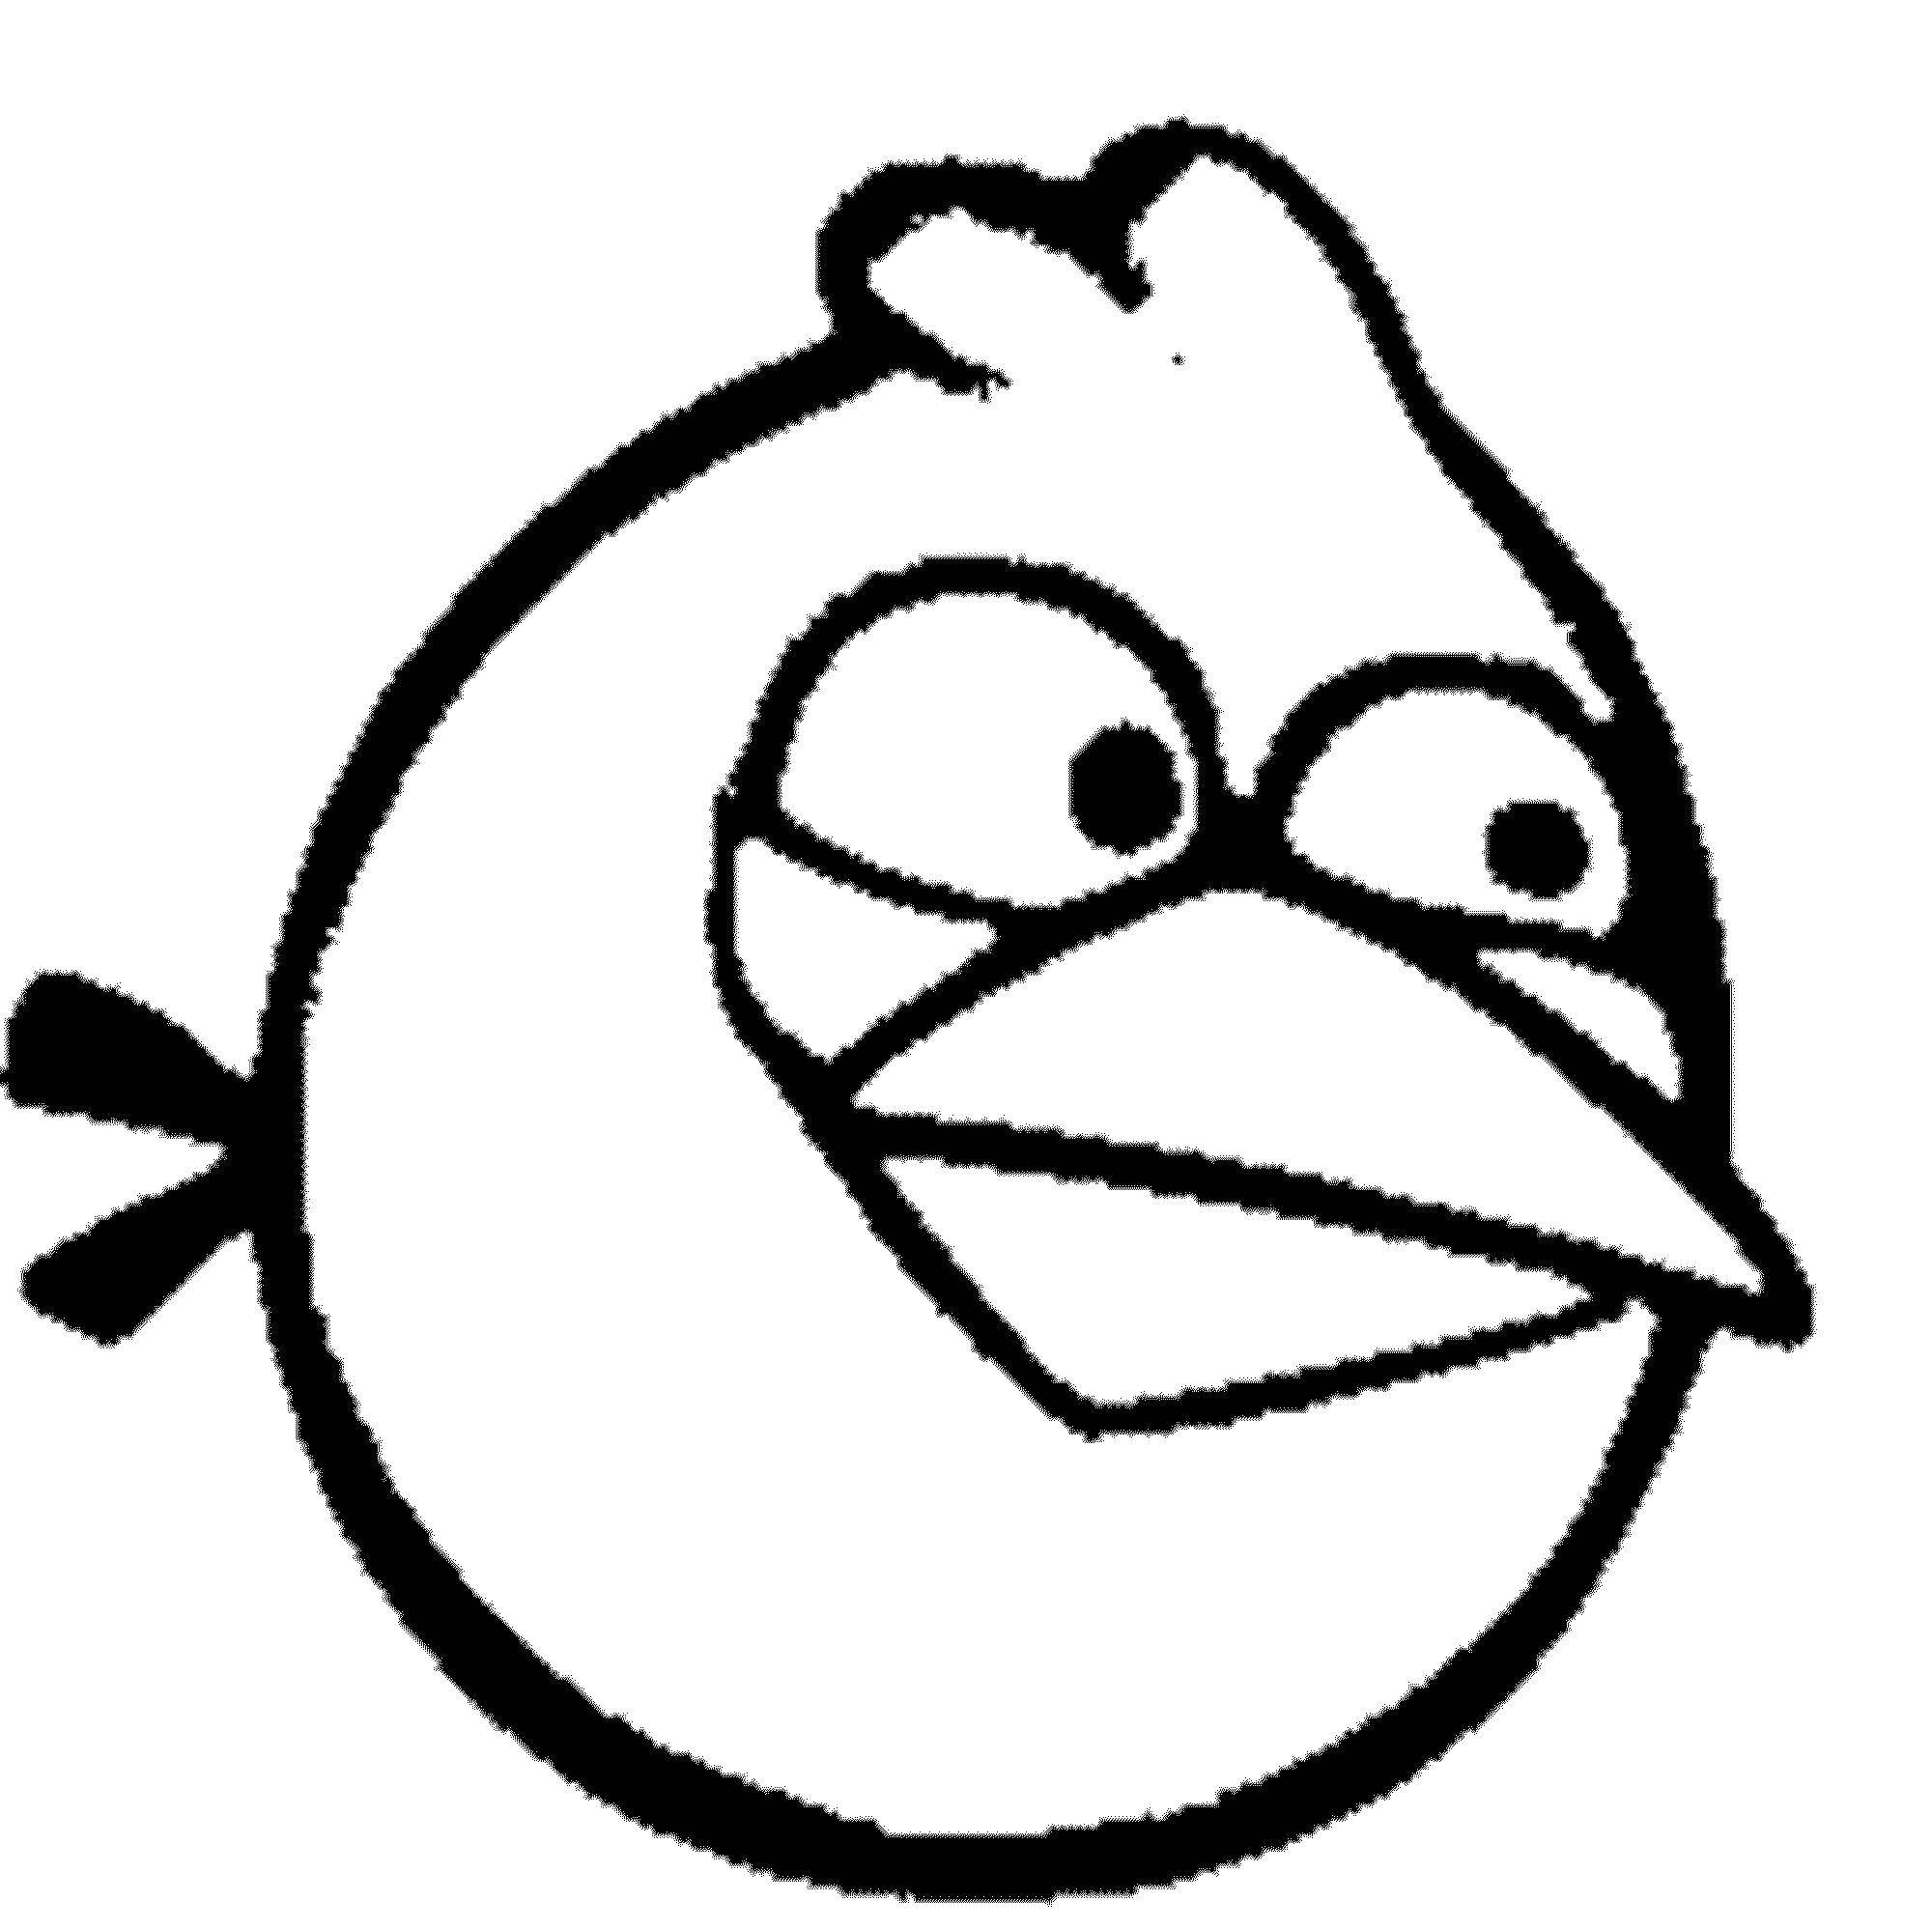 Coloring Angry bird. Category angry birds. Tags:  bird, beak.